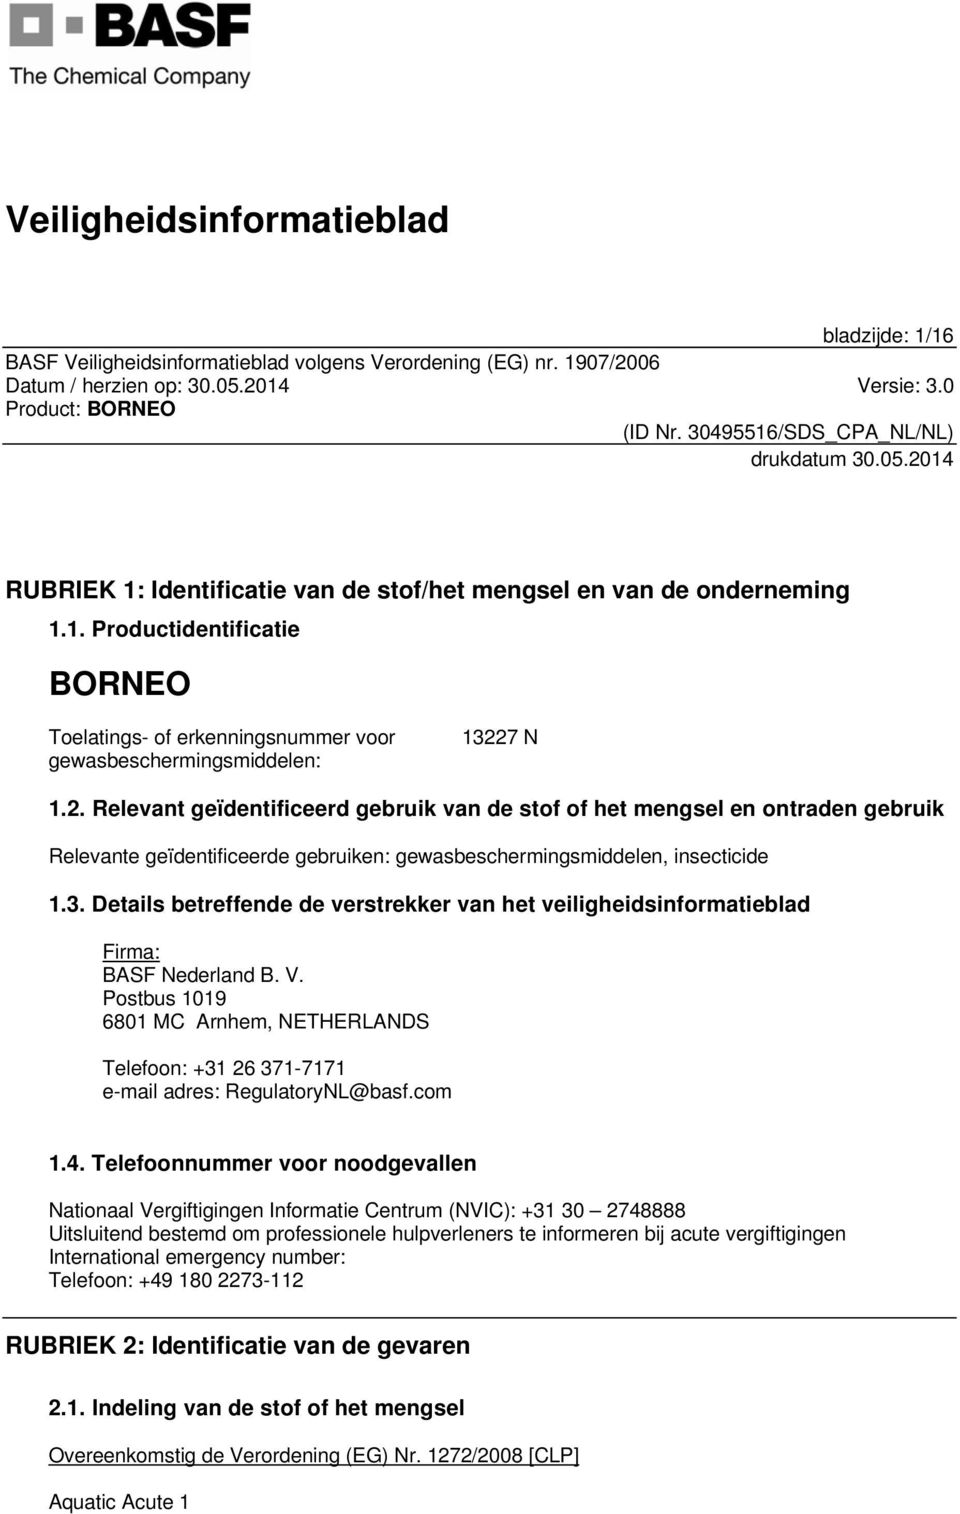 Details betreffende de verstrekker van het veiligheidsinformatieblad Firma: BASF Nederland B. V. Postbus 1019 6801 MC Arnhem, NETHERLANDS Telefoon: +31 26 371-7171 e-mail adres: RegulatoryNL@basf.